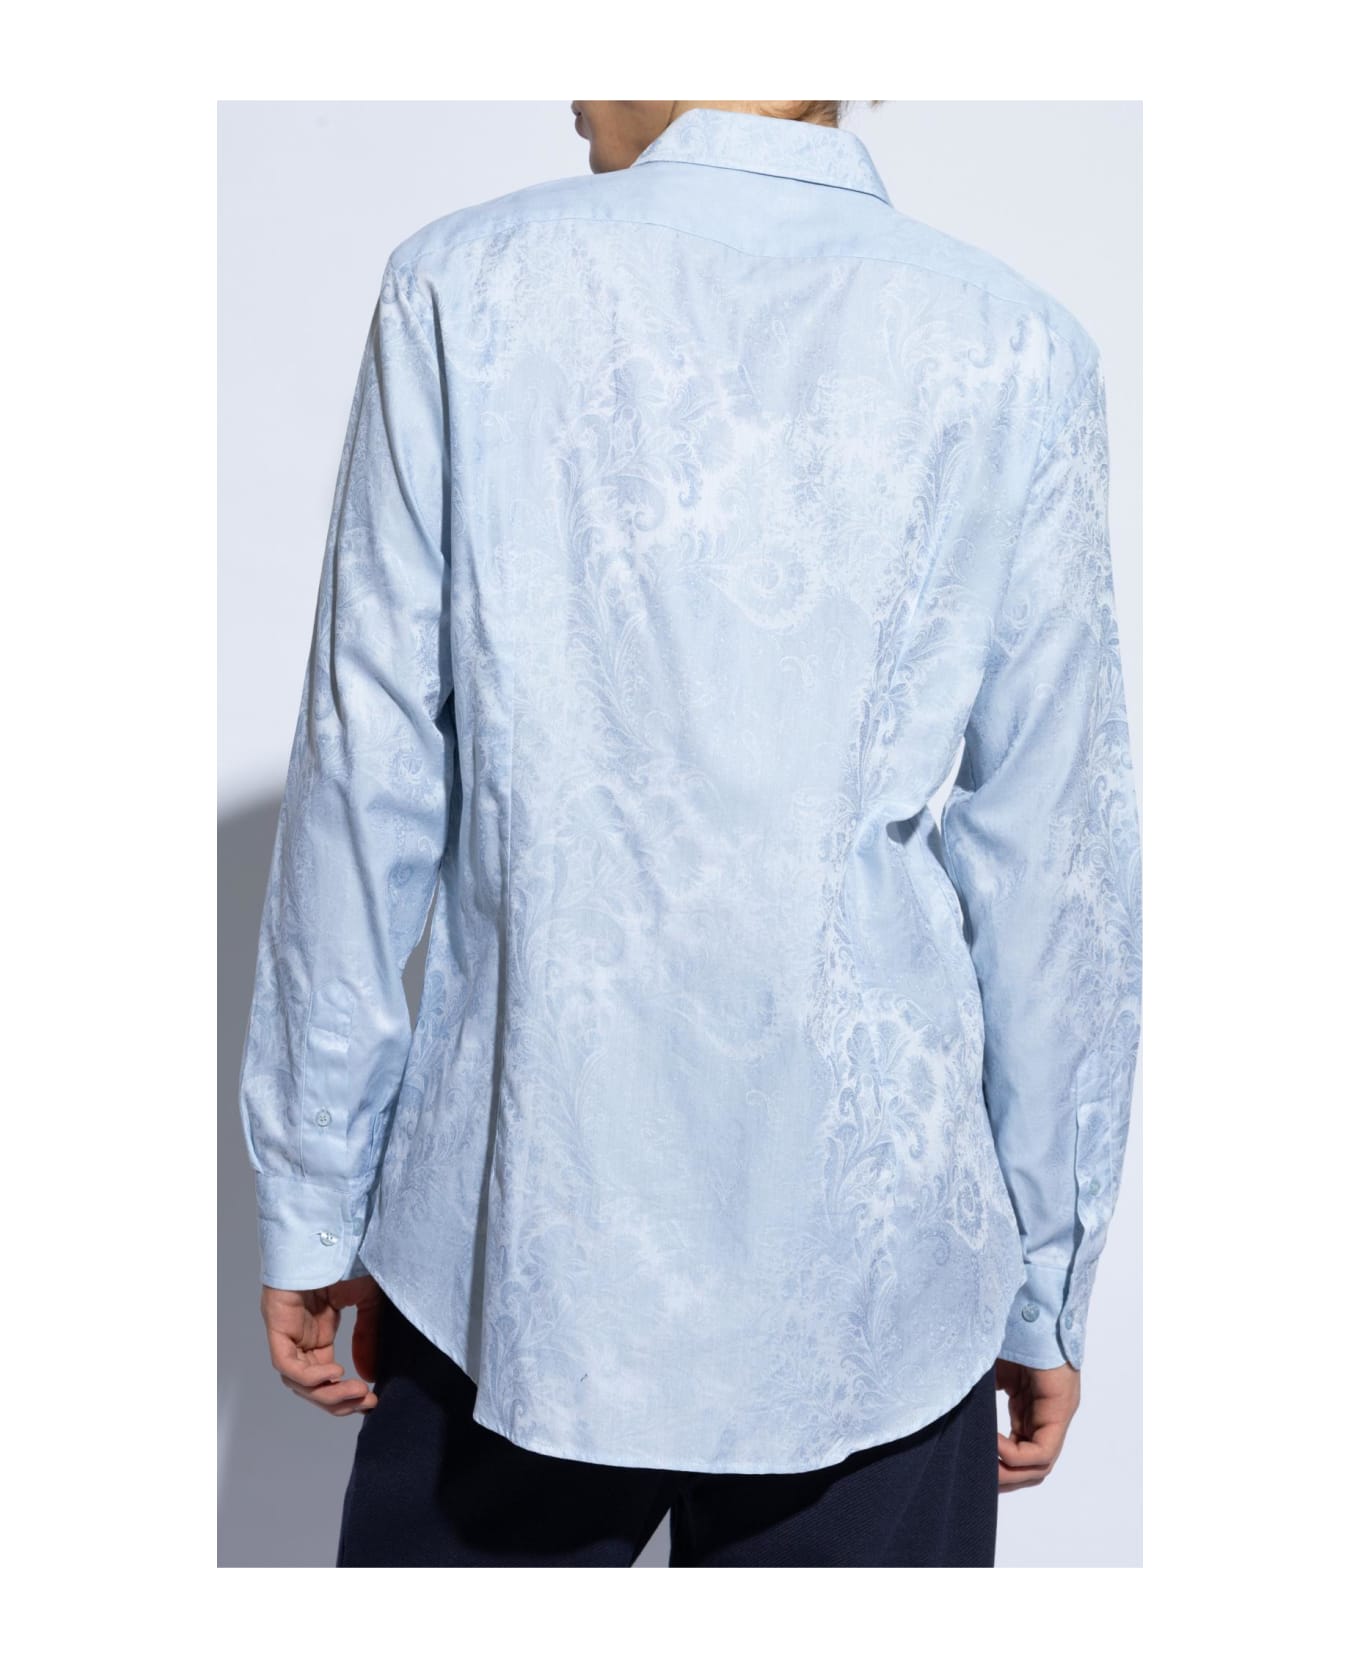 Etro Jacquard Pattern Shirt - Variante abbinata